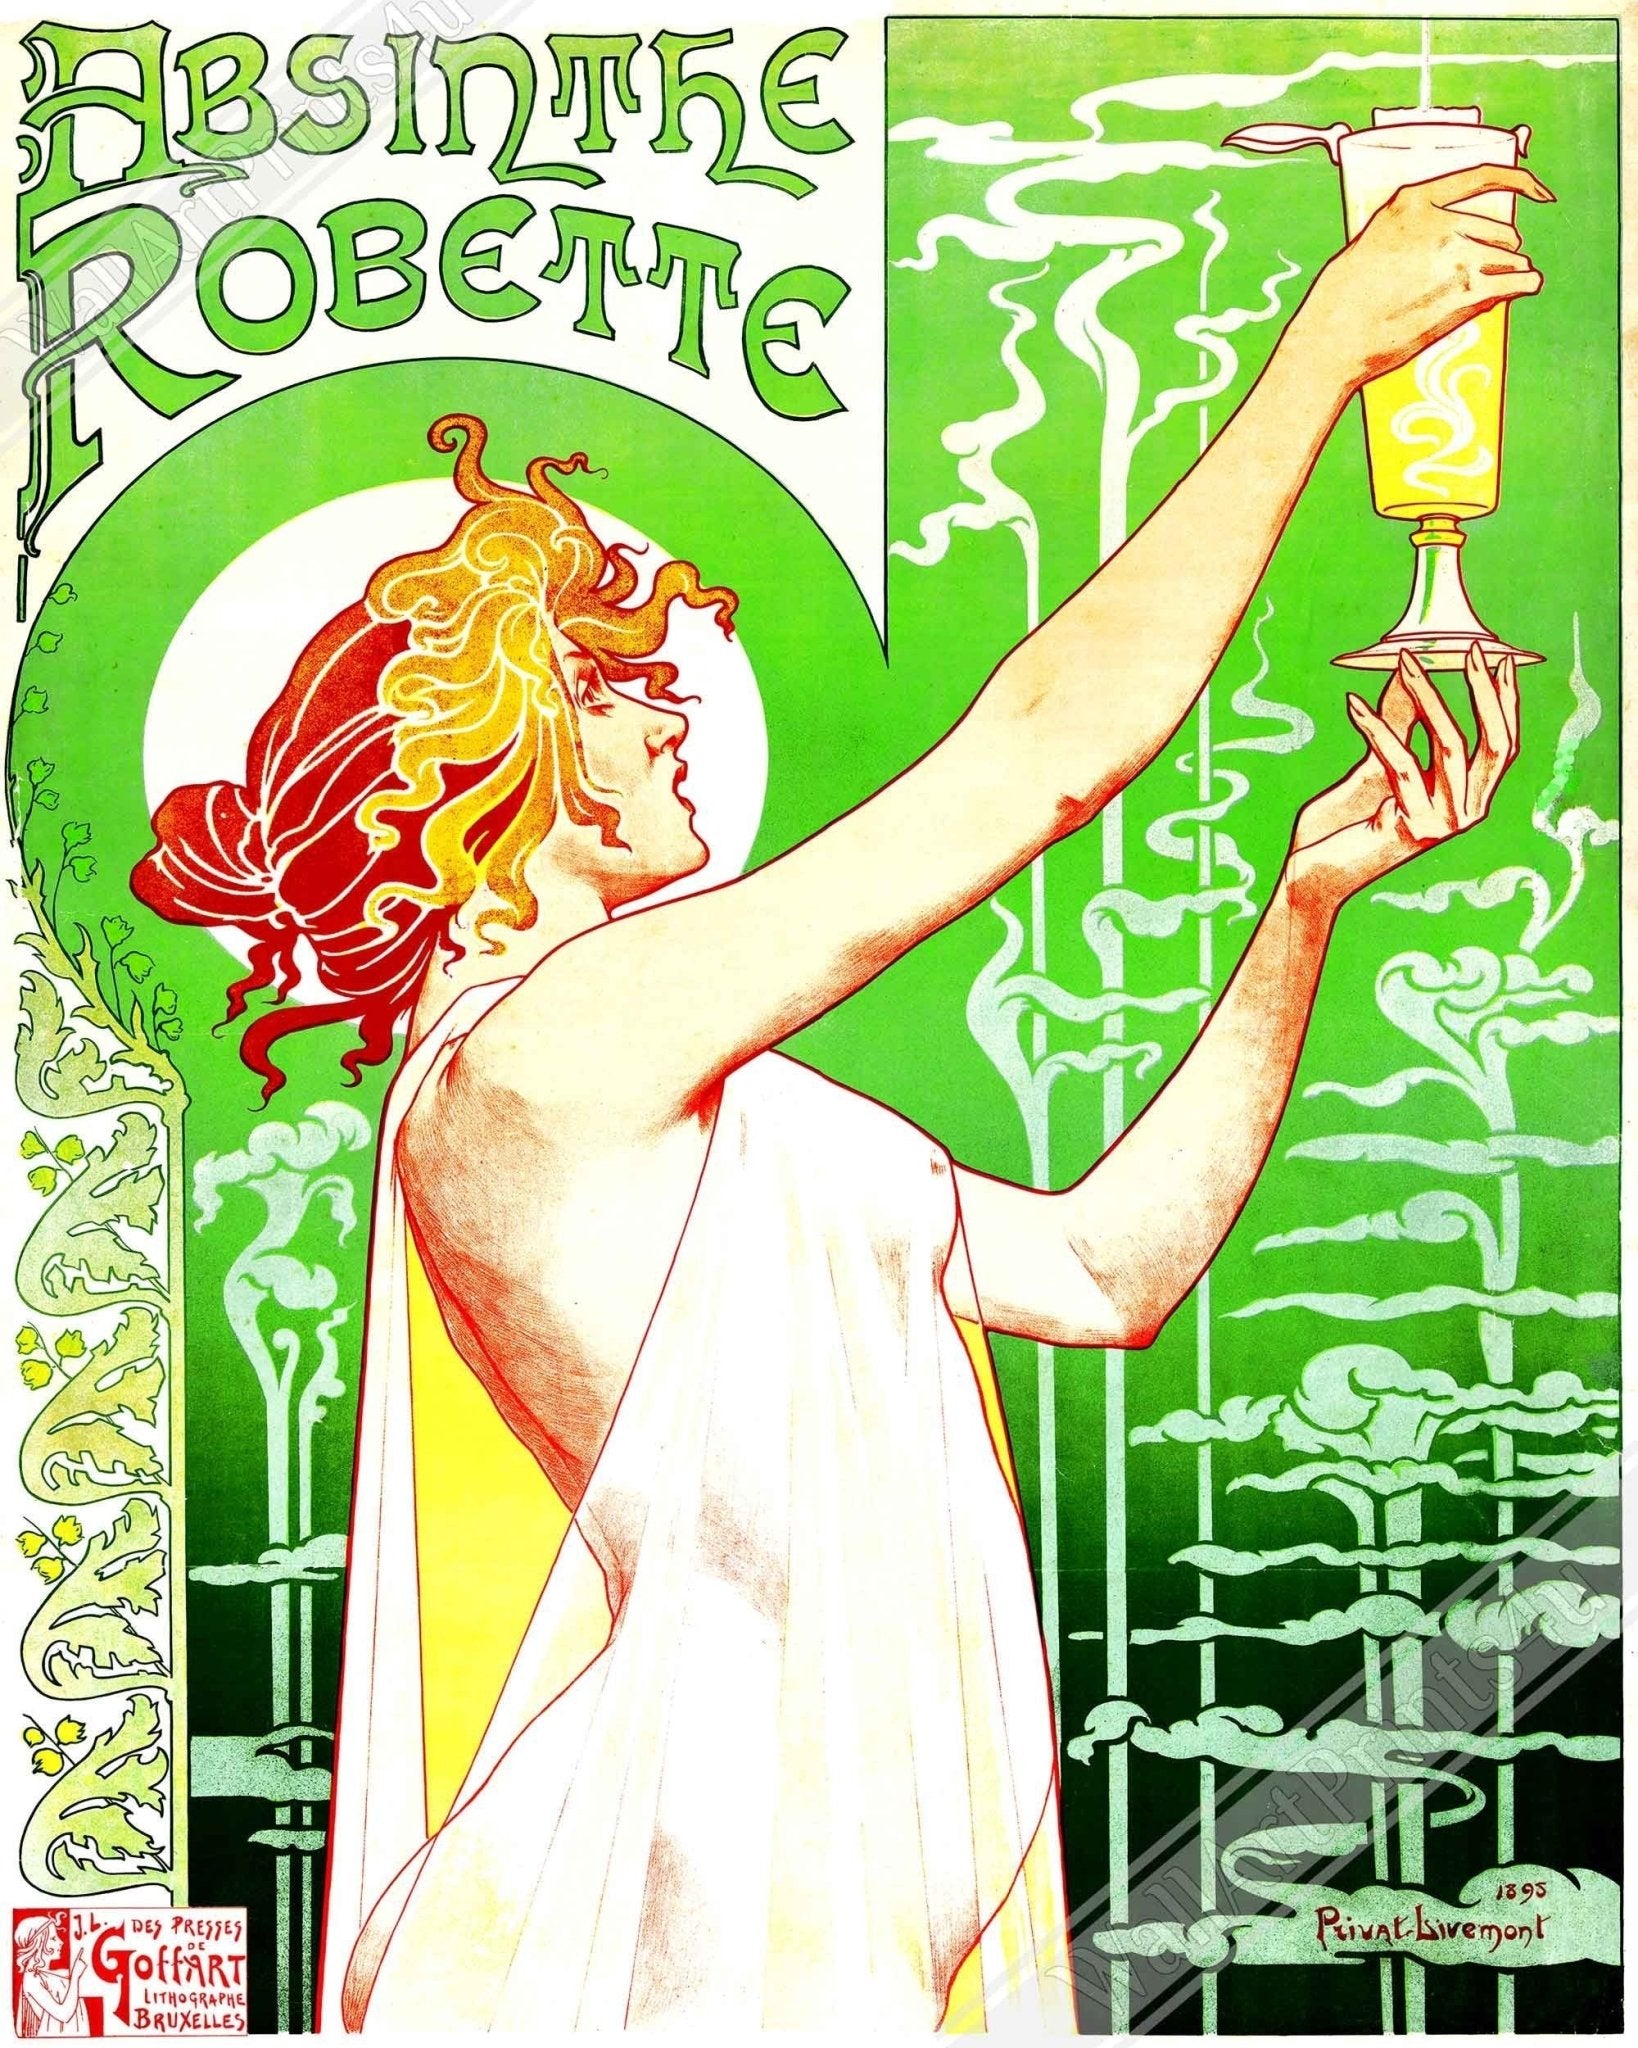 Absinthe Canvas - Absinthe Ban - Absinthe Robette Canvas Print 1896 - WallArtPrints4U